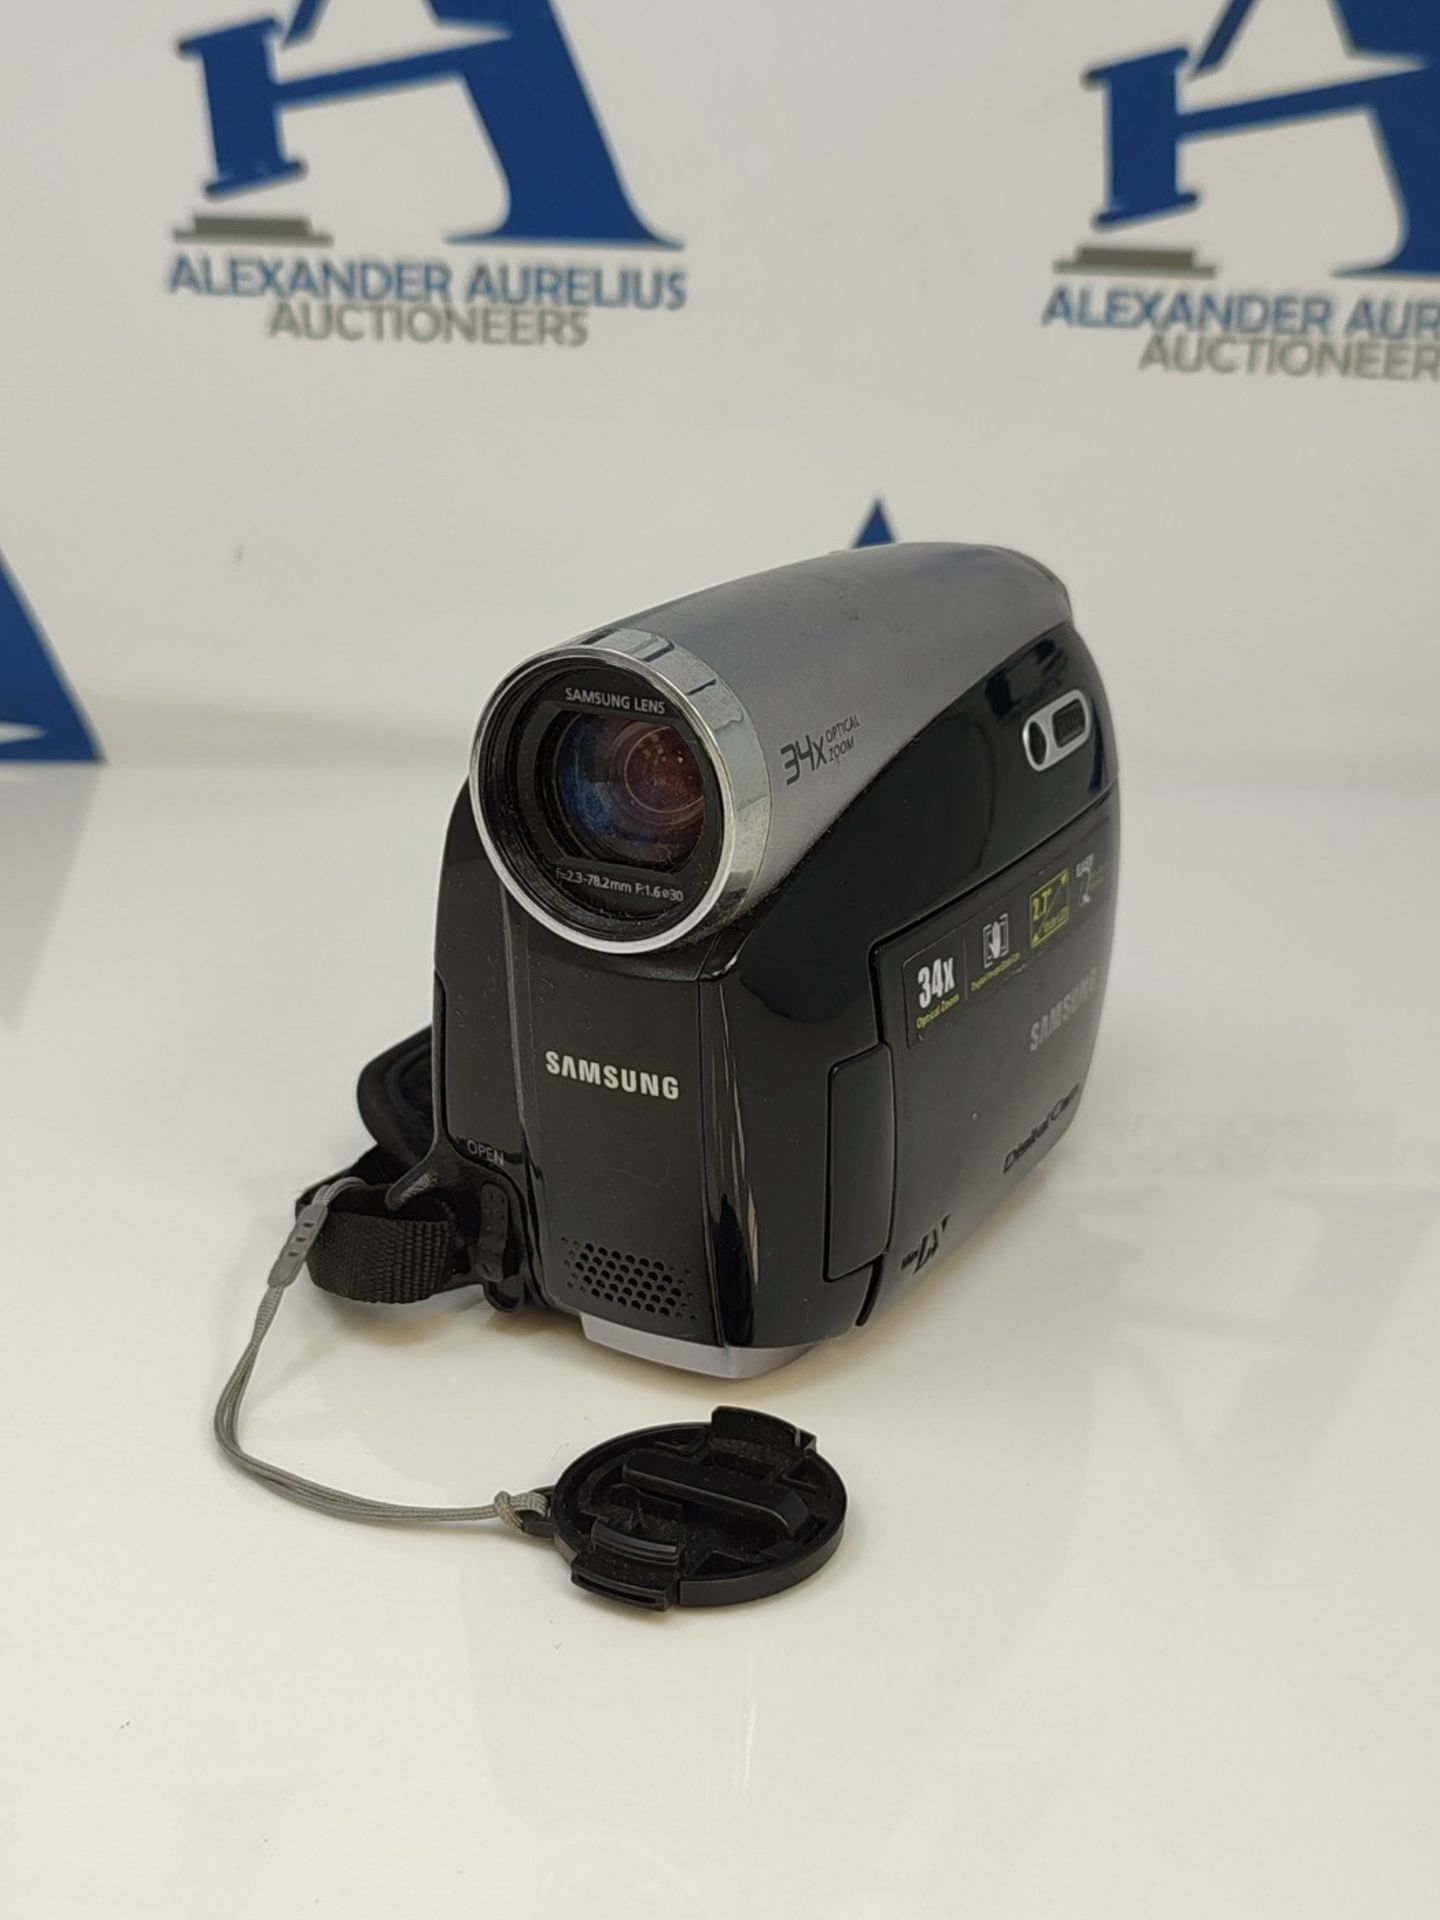 Samsung VP-DX100/XEU DVD Camcorder (34x Optical Zoom) - Image 2 of 3